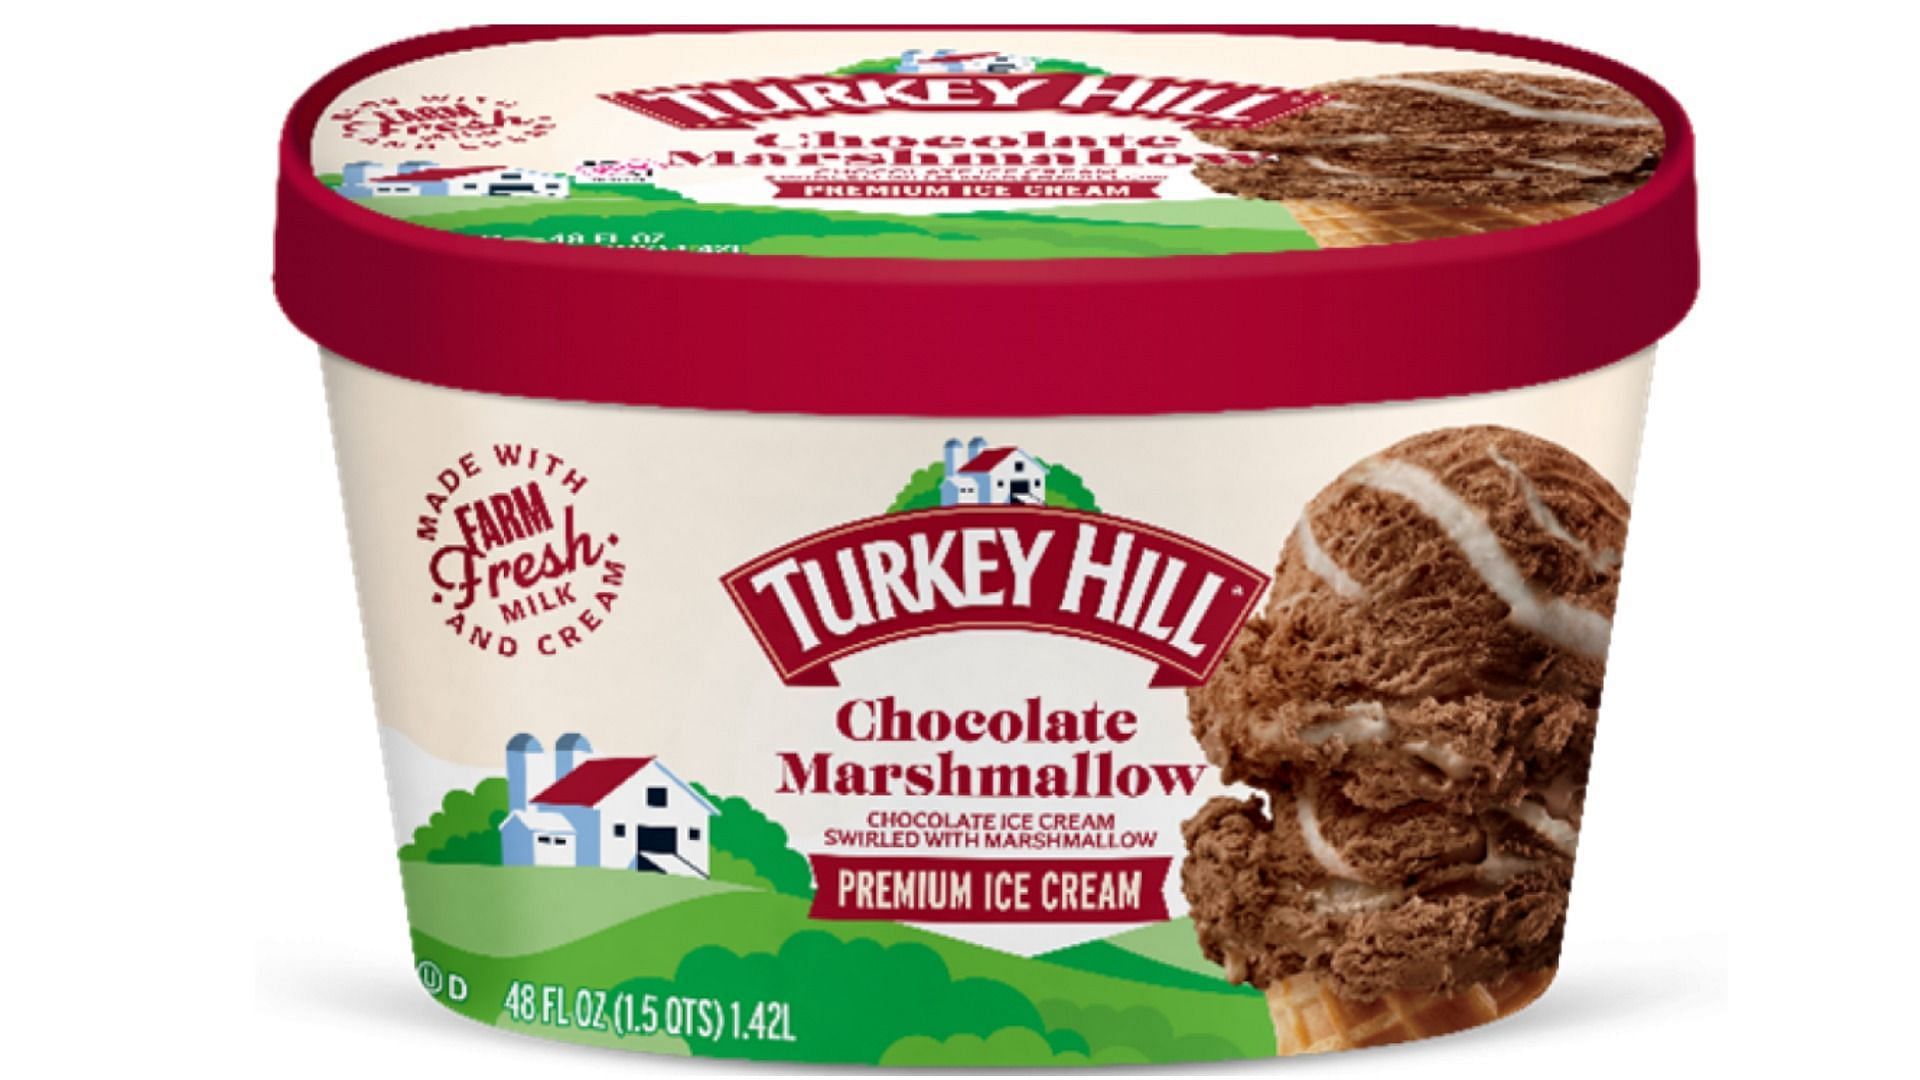 Turkey Hill Dairy has issued a recall of select Chocolate Marshmallow Premium Ice Cream (Image via FDA.gov)